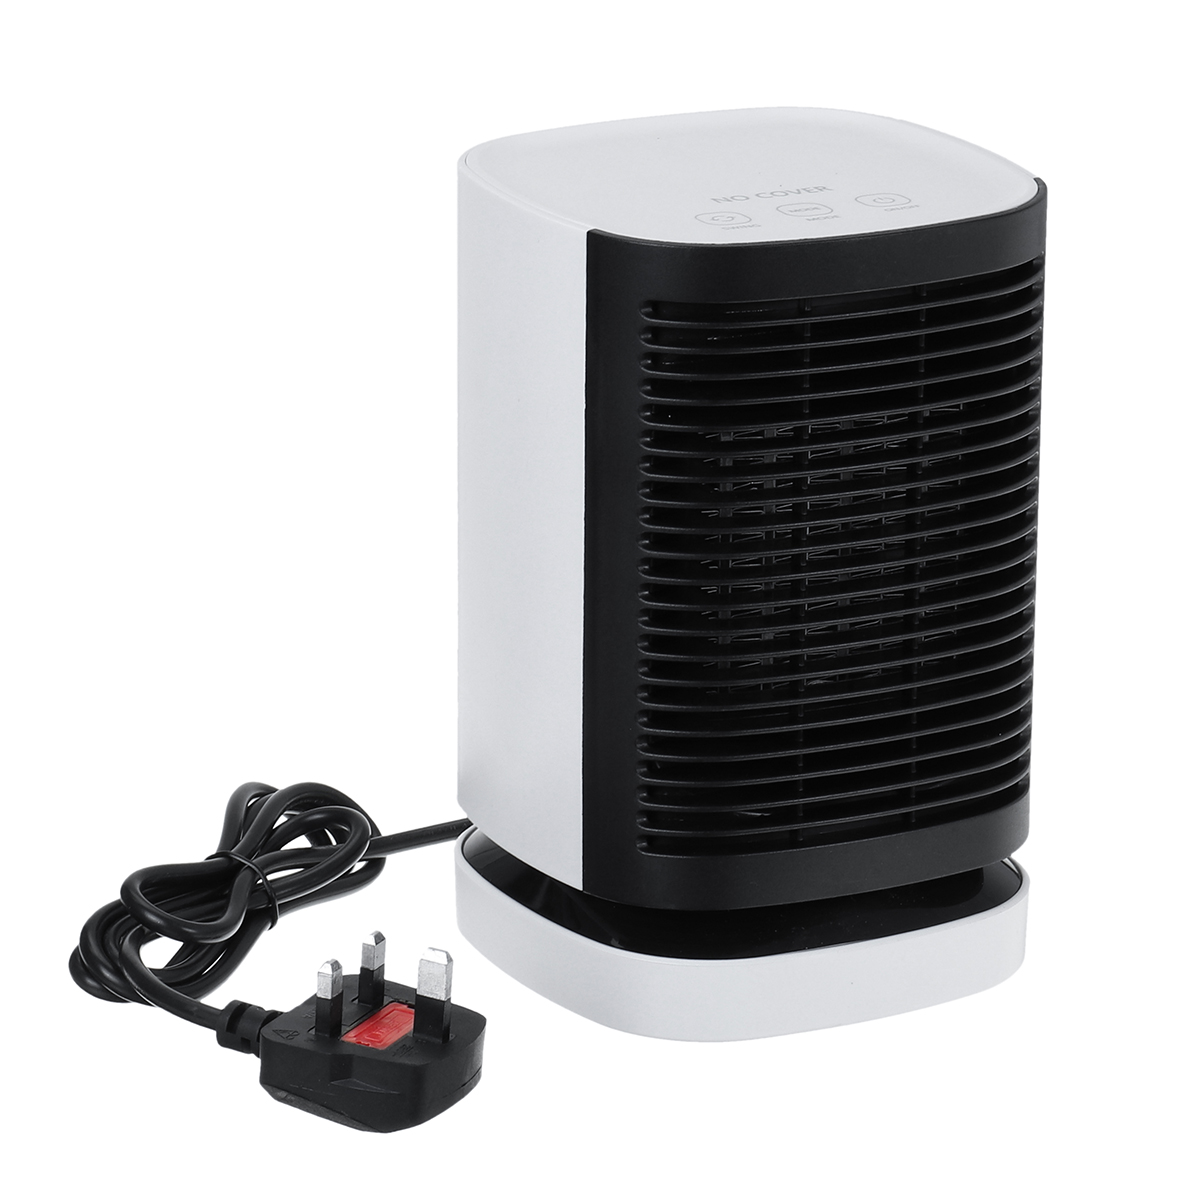 

950W Mini Portable Intelligent Sensor Heater Electric Fan Quiet PTC Ceramic Air Warmer Room Office